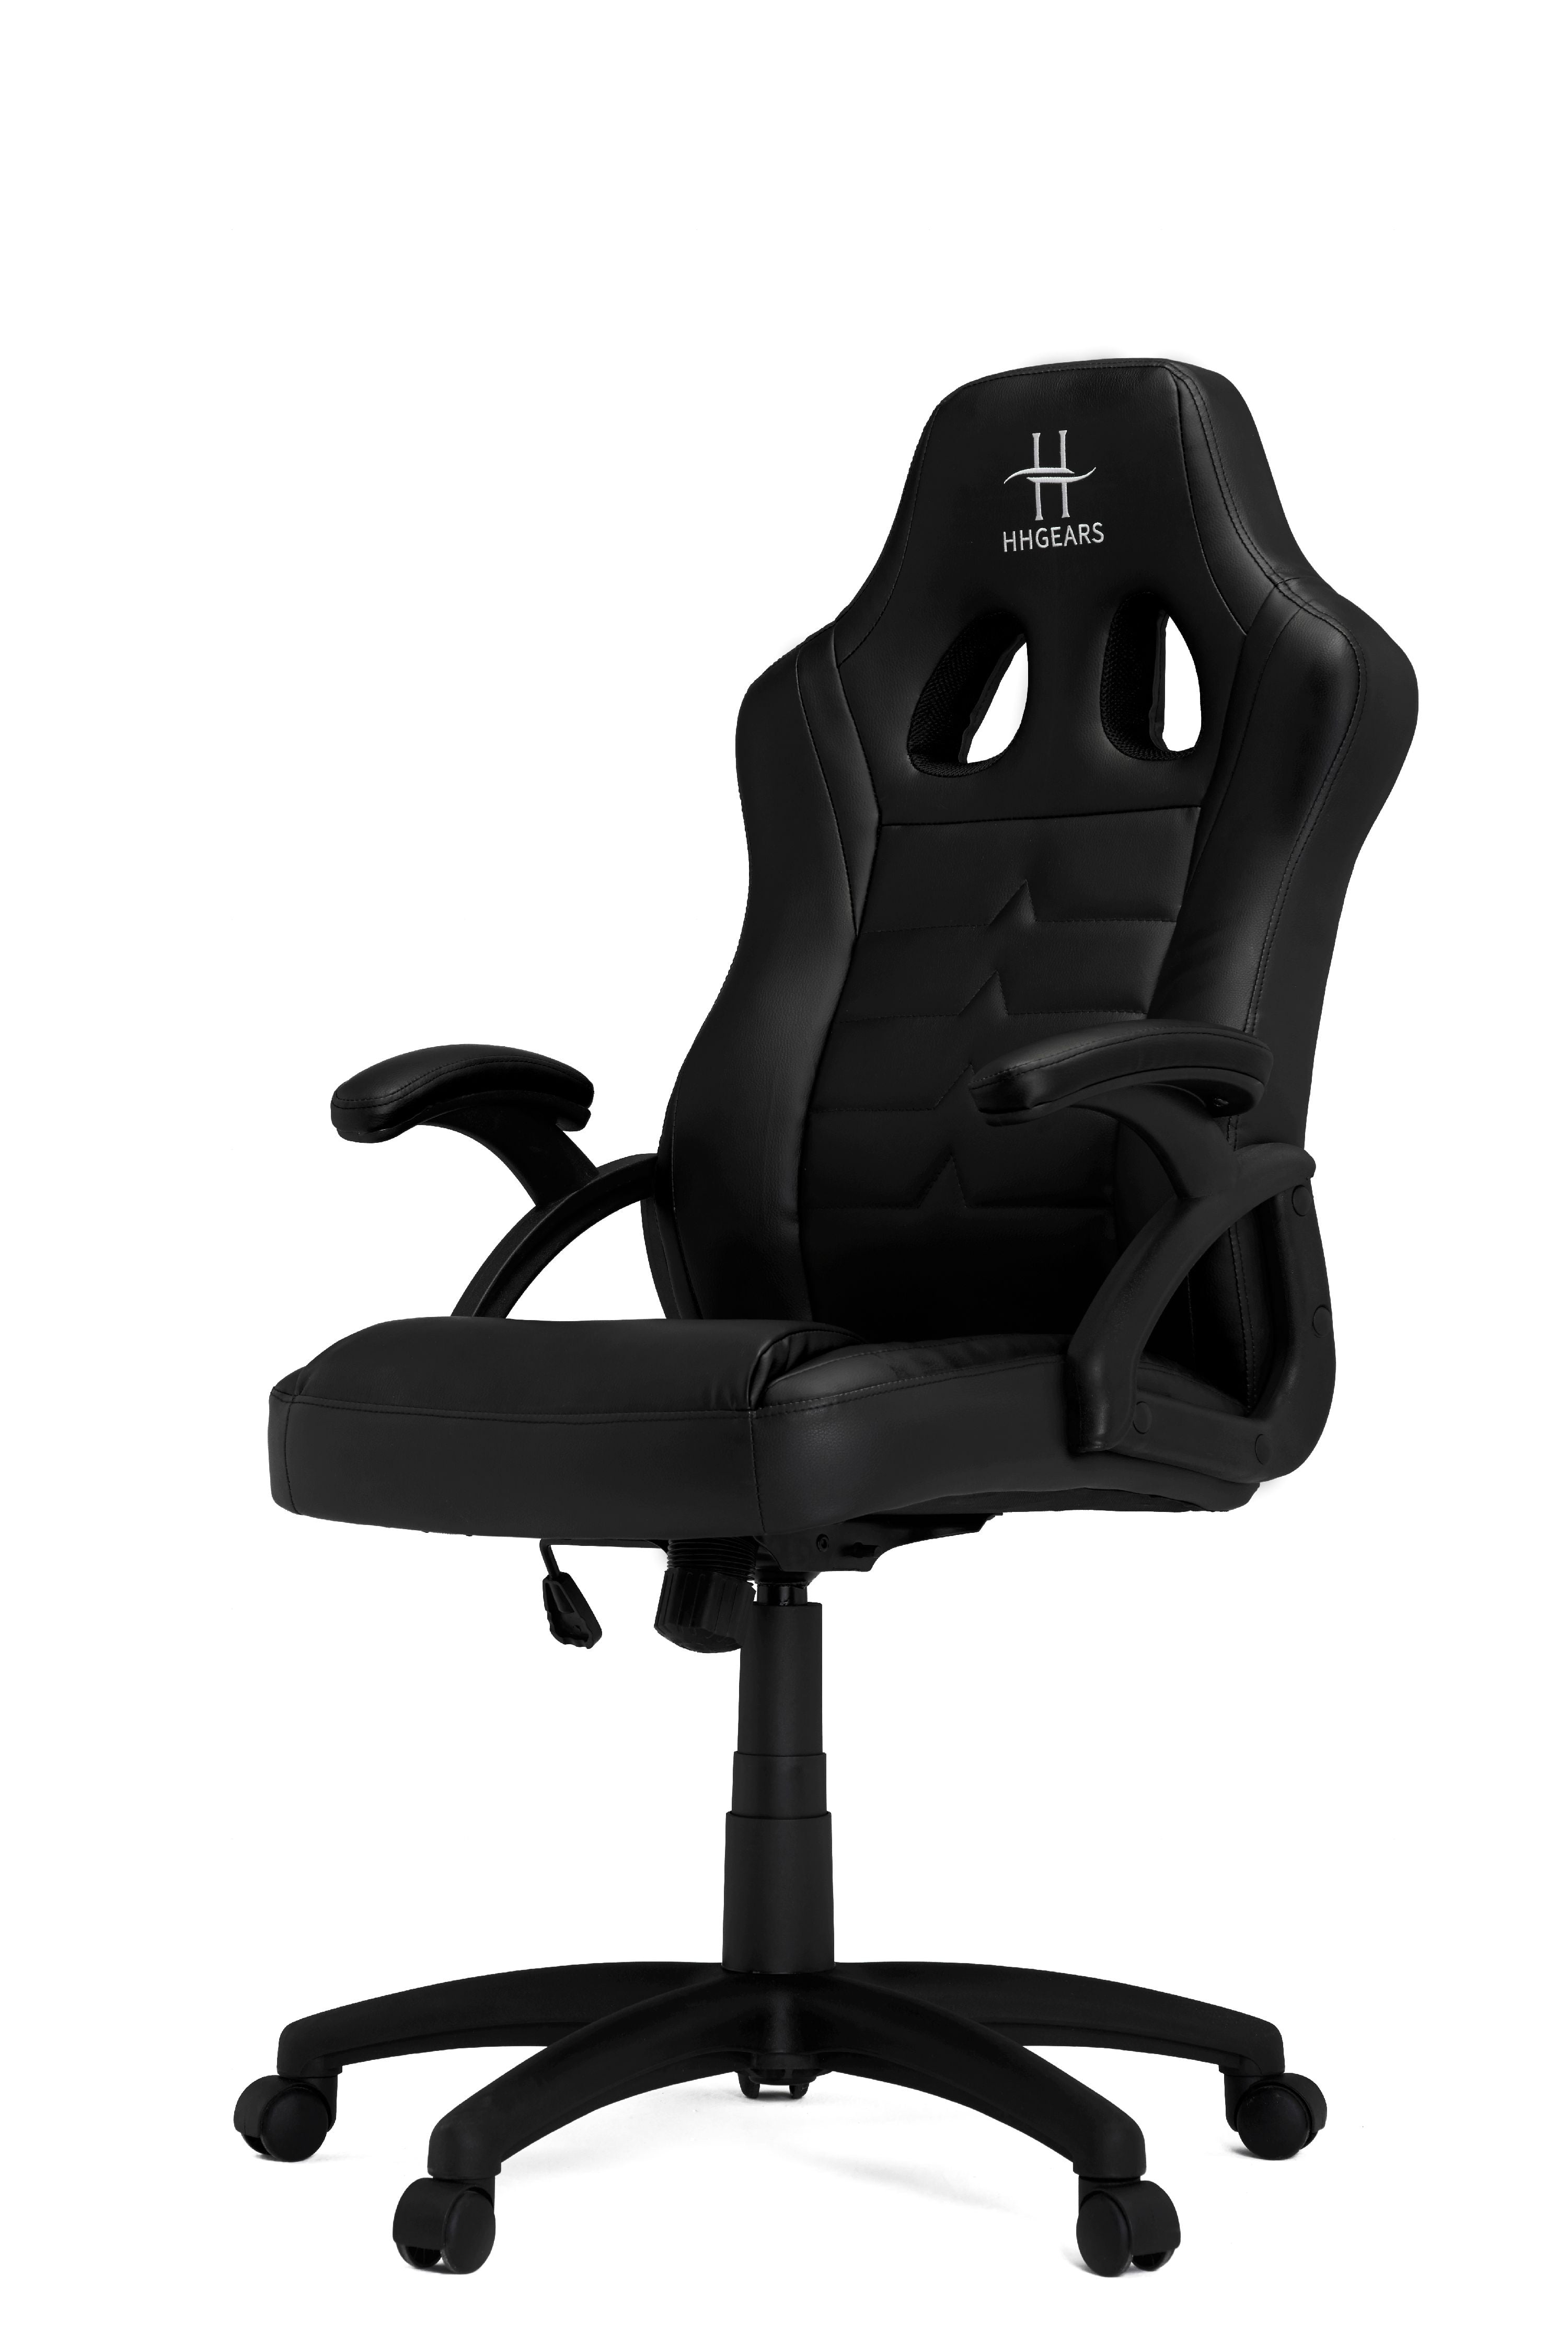 HHGears SM115 Gaming Chair Black